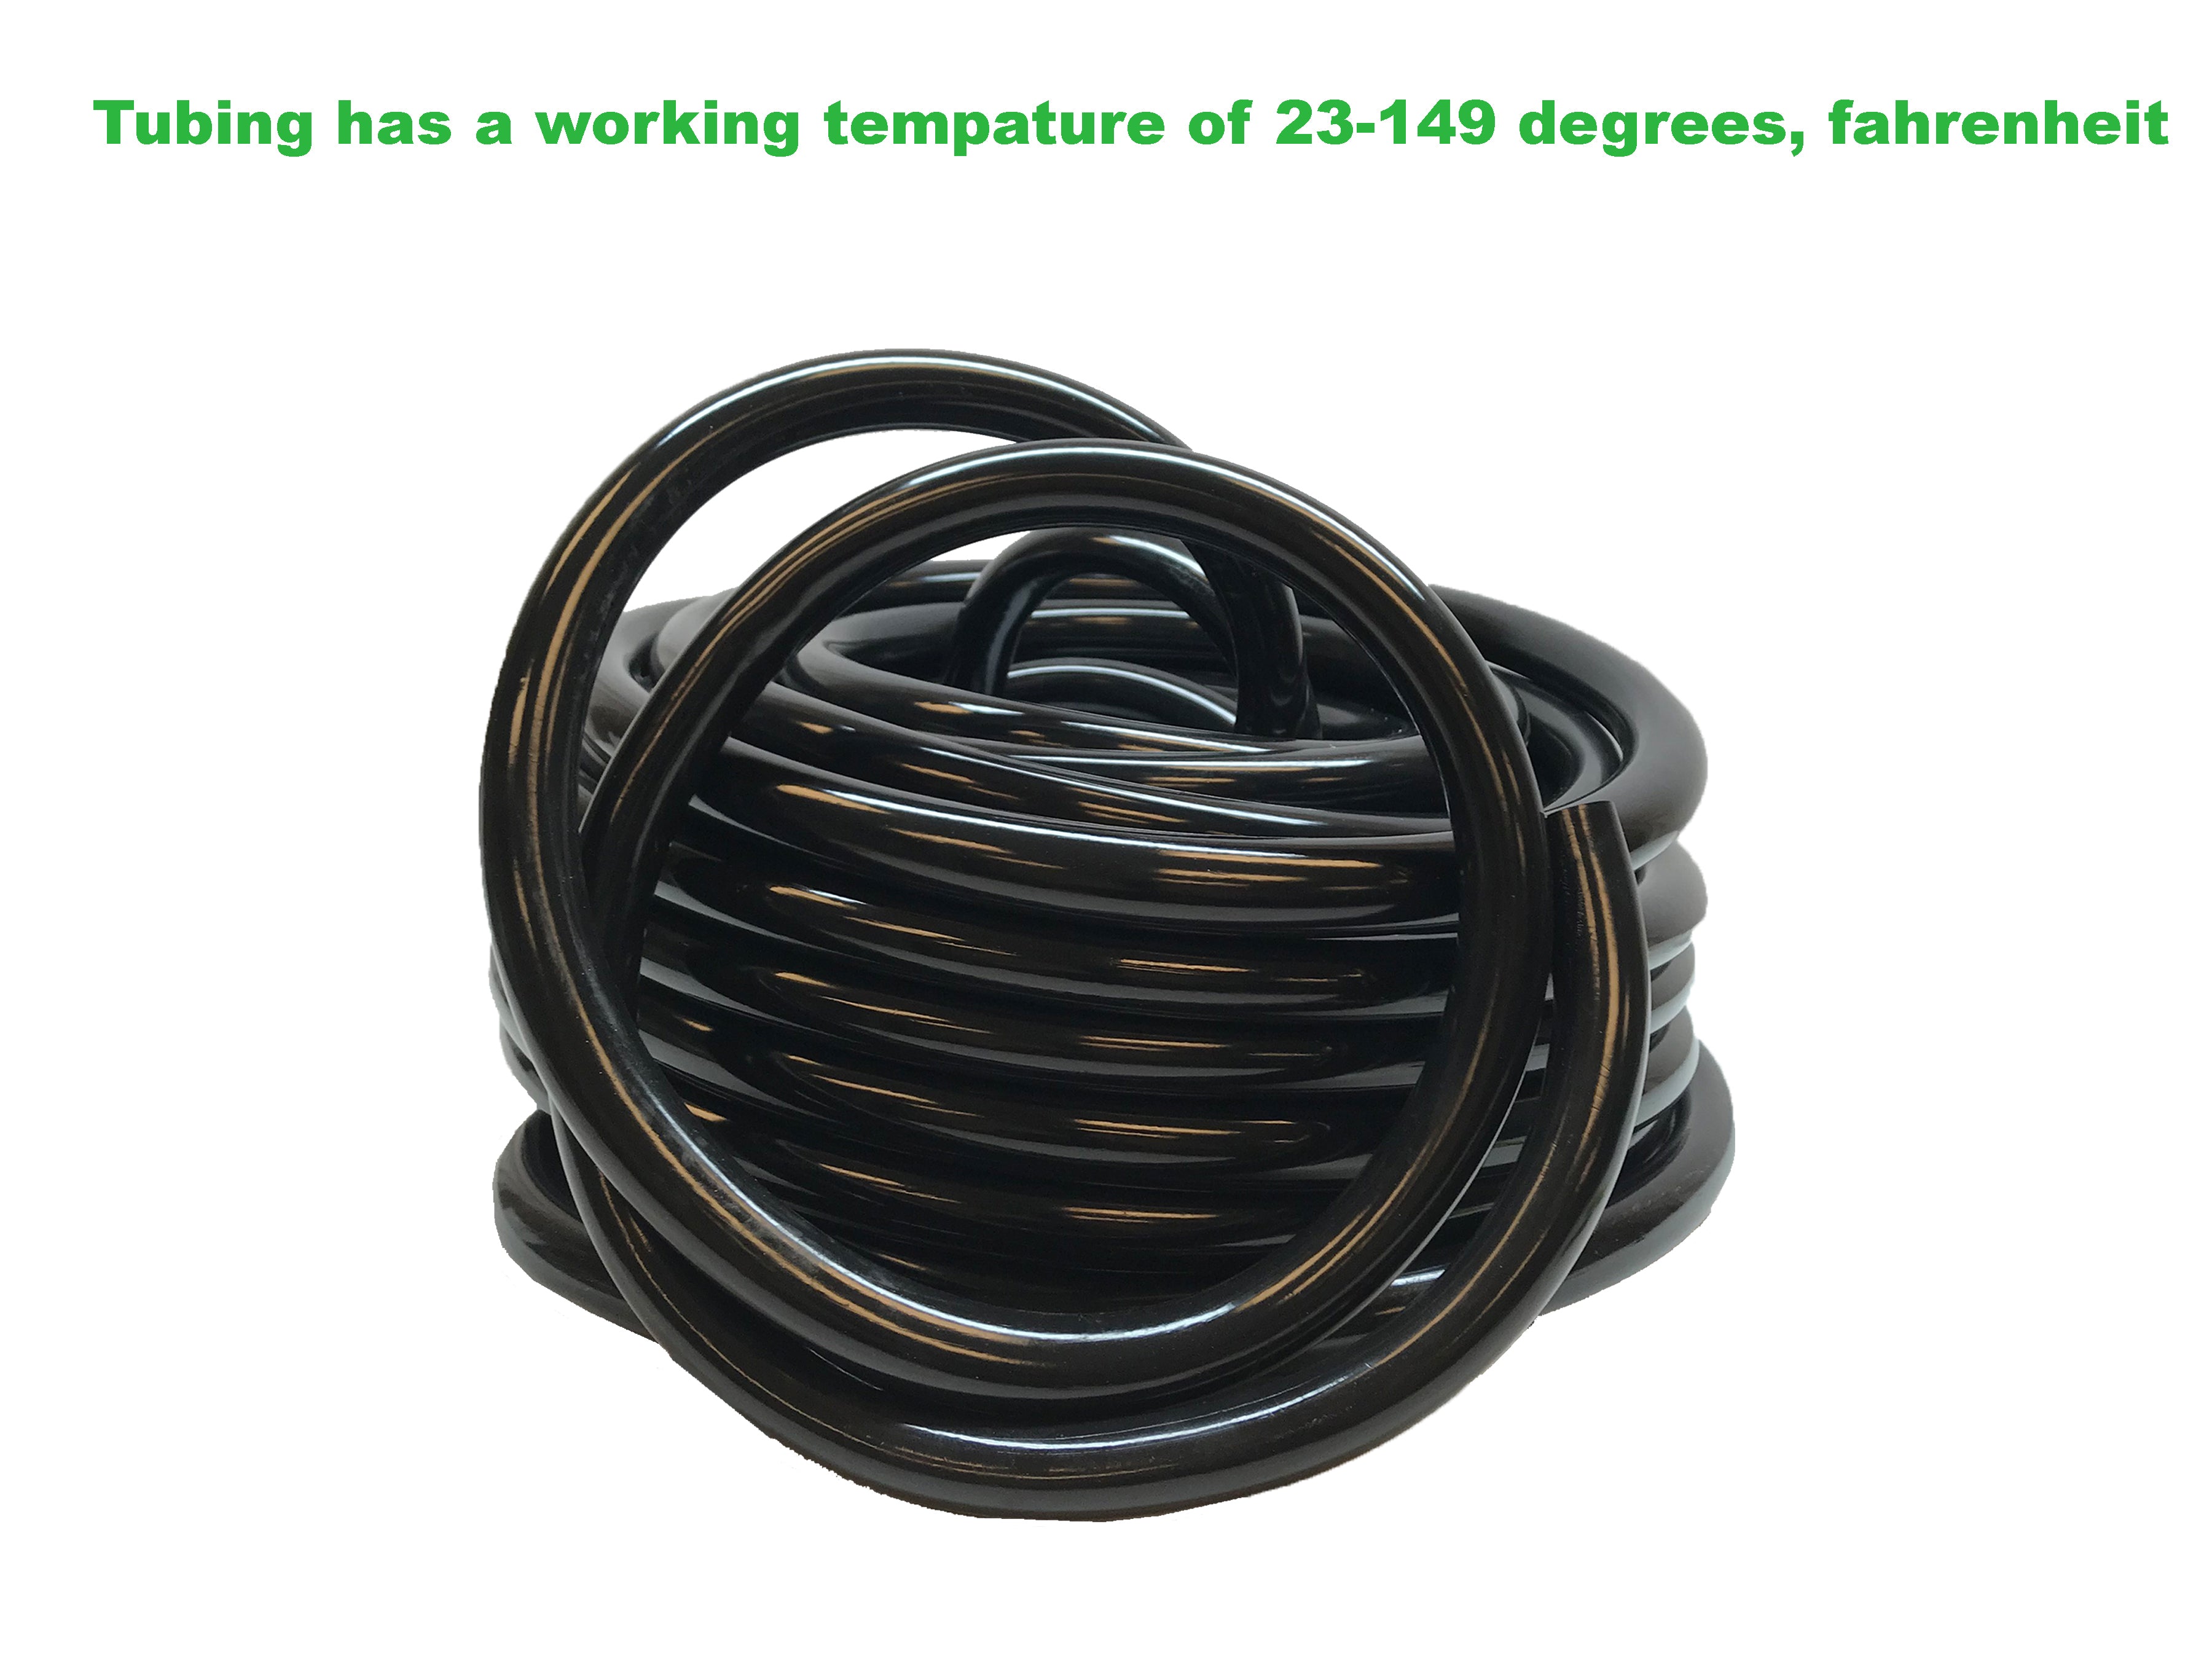 Viagrow Vinyl Multipurpose Irrigation Tubing(100ft, 3/4 inch ID-1 inch OD), Black